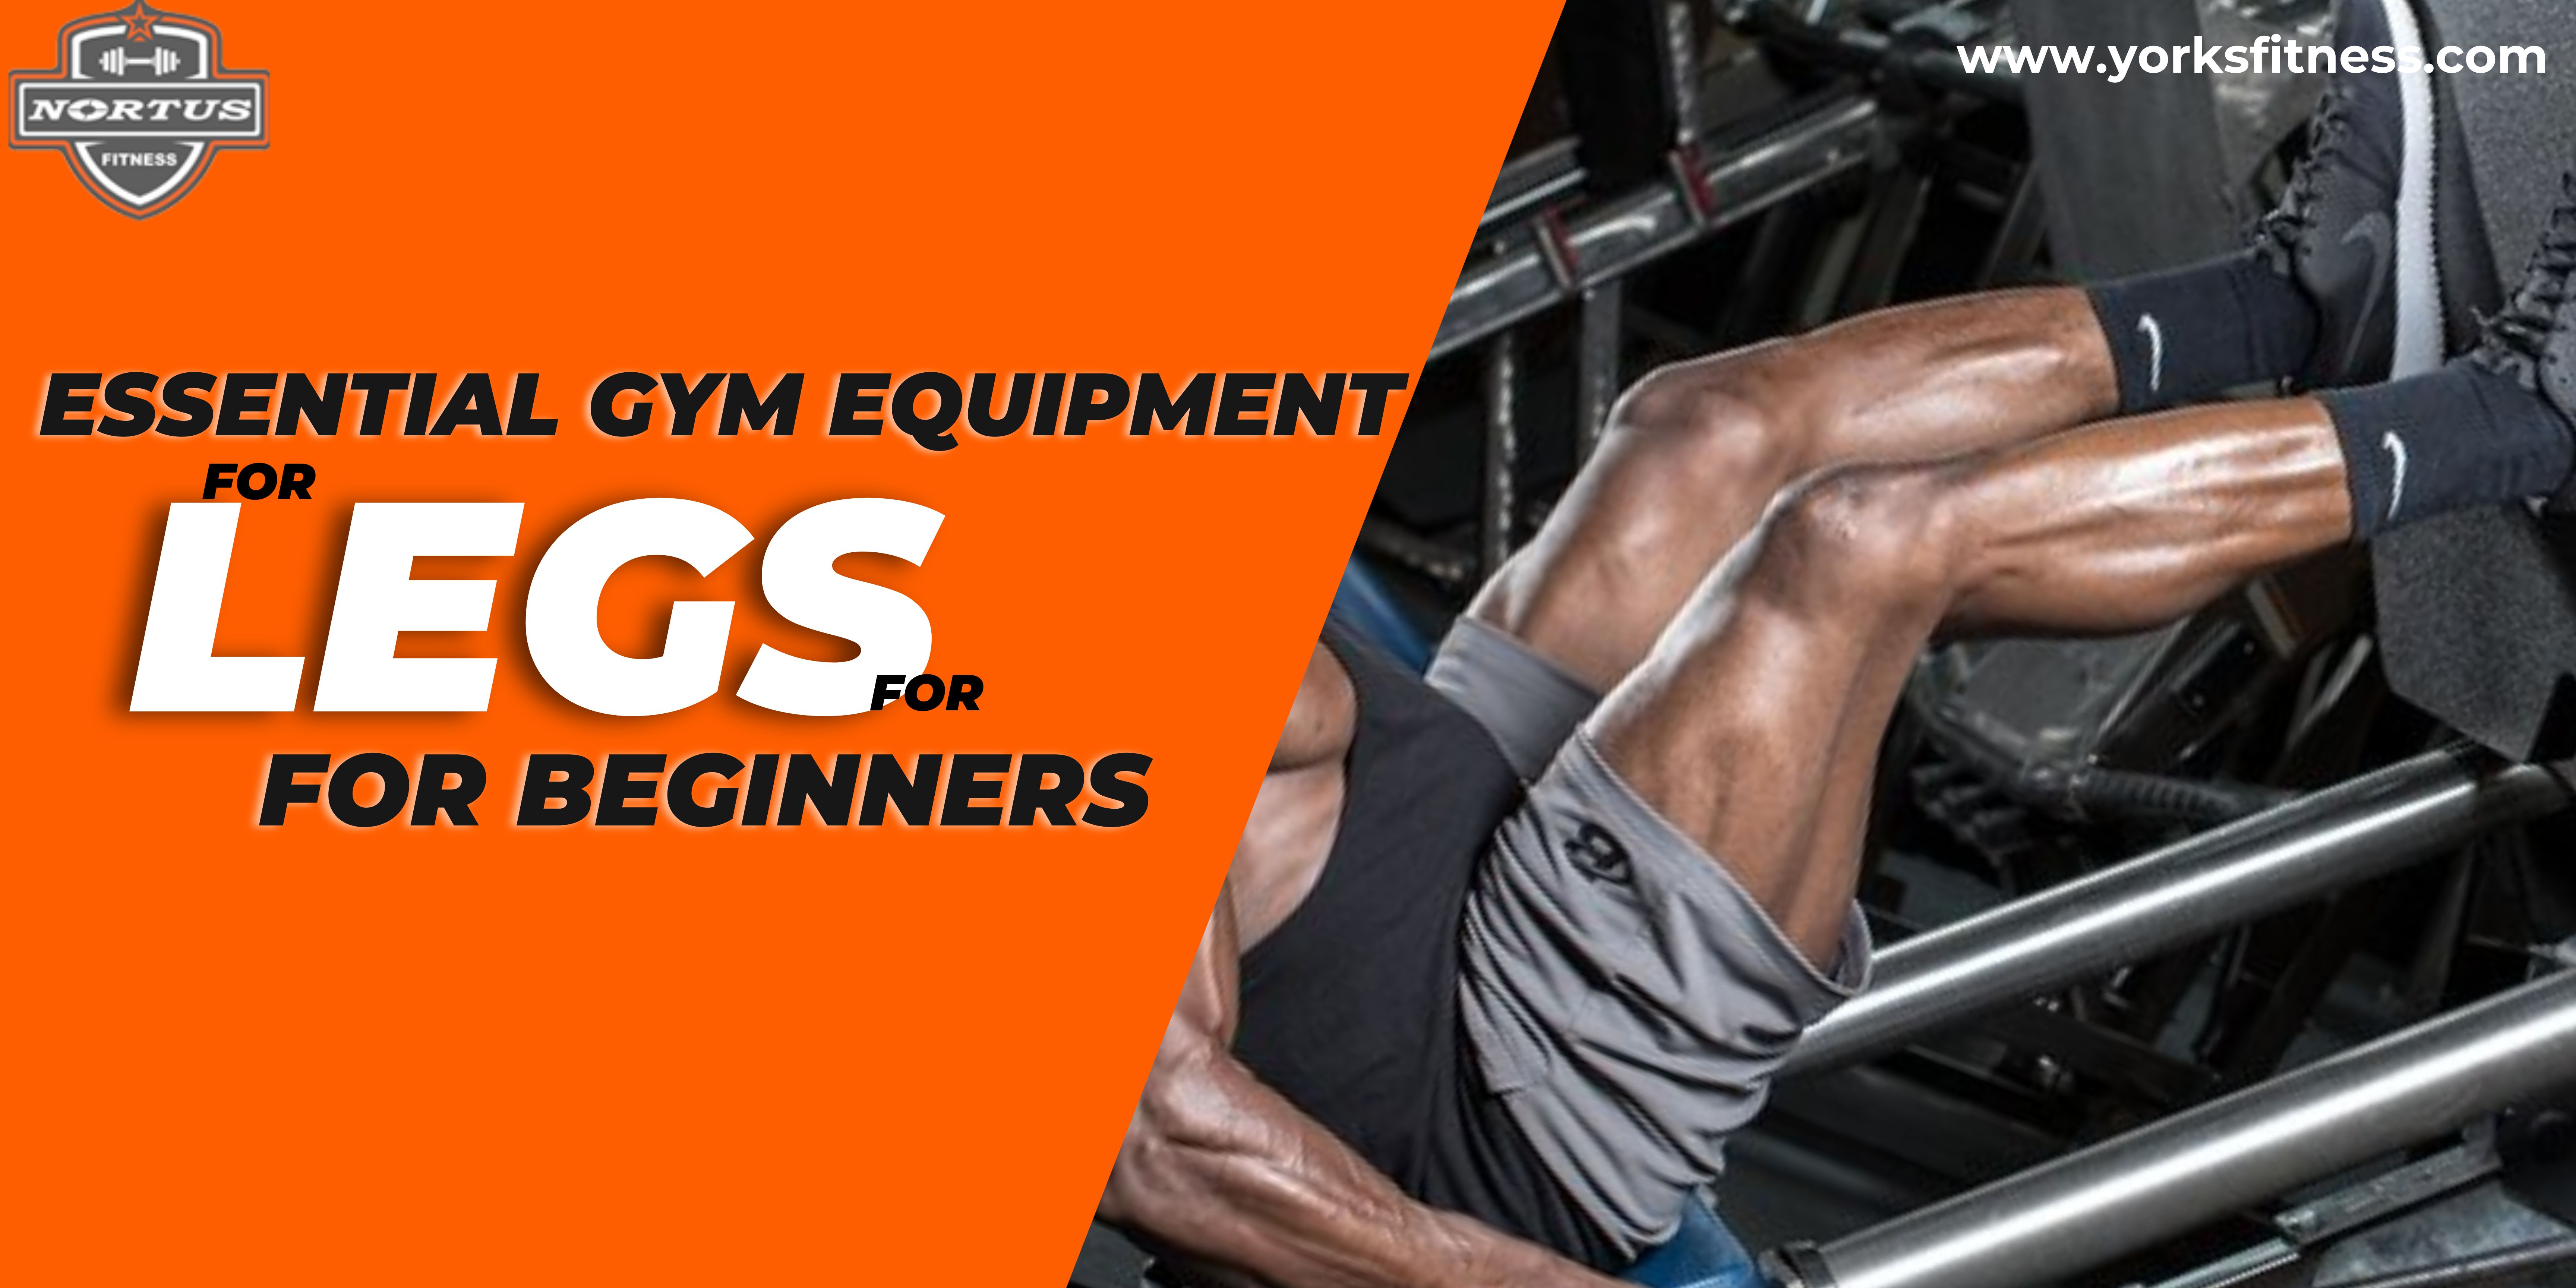 https://www.yorksfitness.com/public/images/news/1709025438-essential-gym-equipment-for-legs-for-beginners.jpg